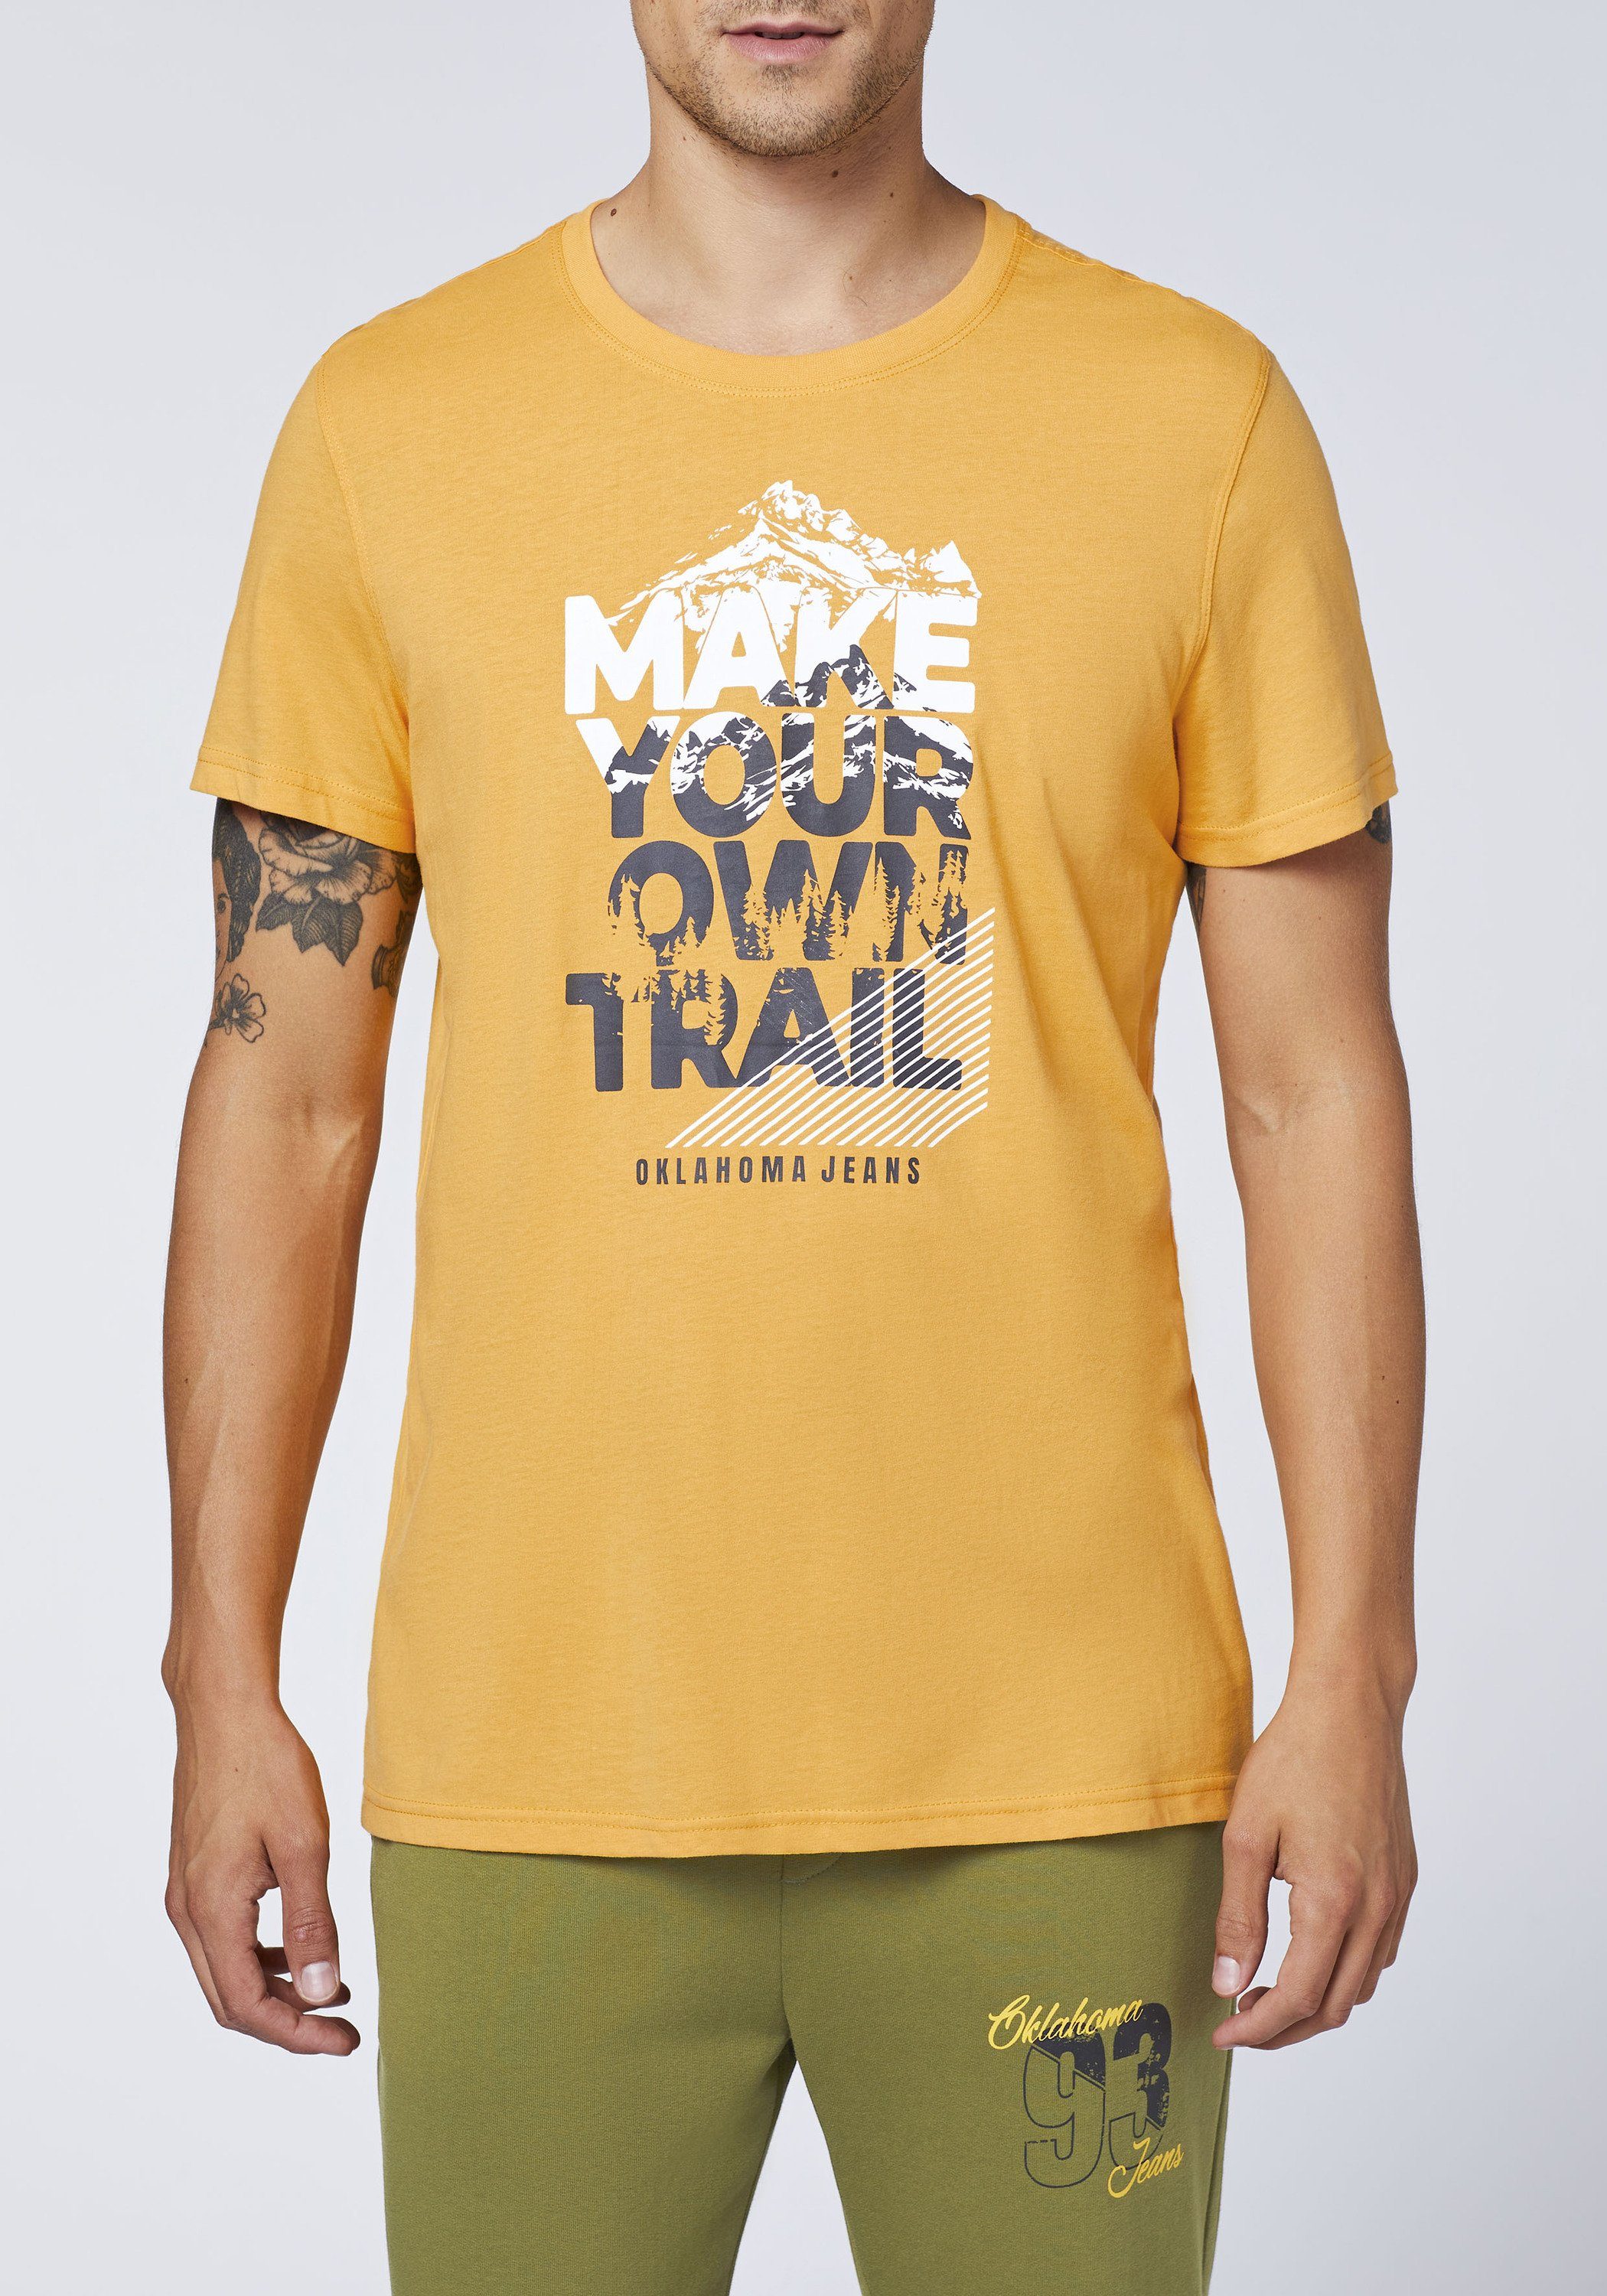 im Print-Shirt Oklahoma Jeans mit Beeswax Schriftzug 14-0941 Mountain-Look